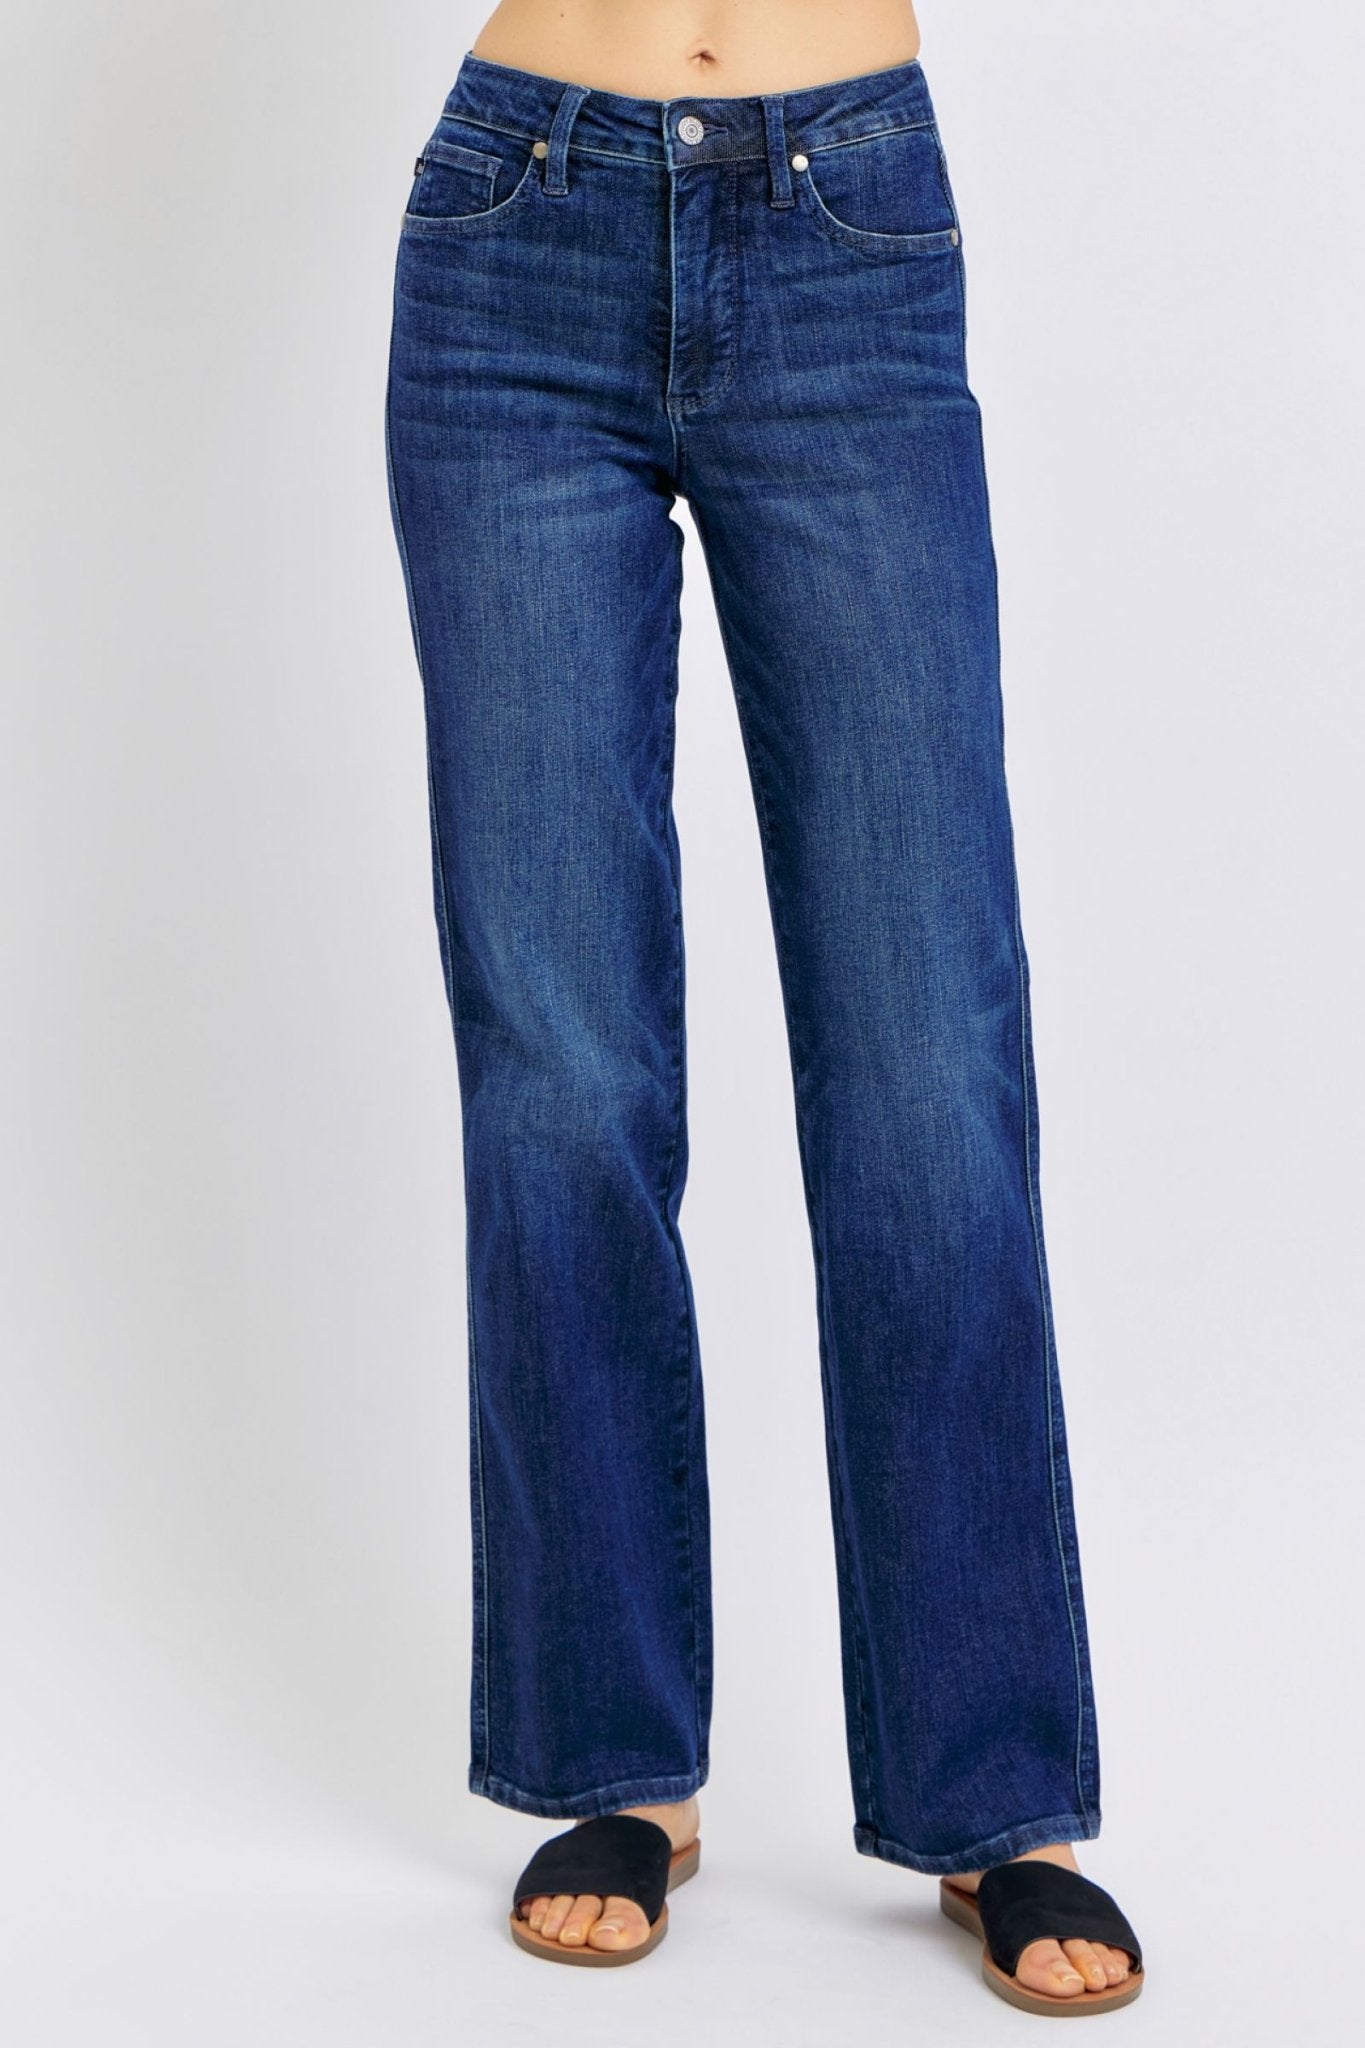 Judy Blue Janie Tummy Control Classic Straight Jeans - Lavender Hills BeautyJudy Blue88861REG - 00